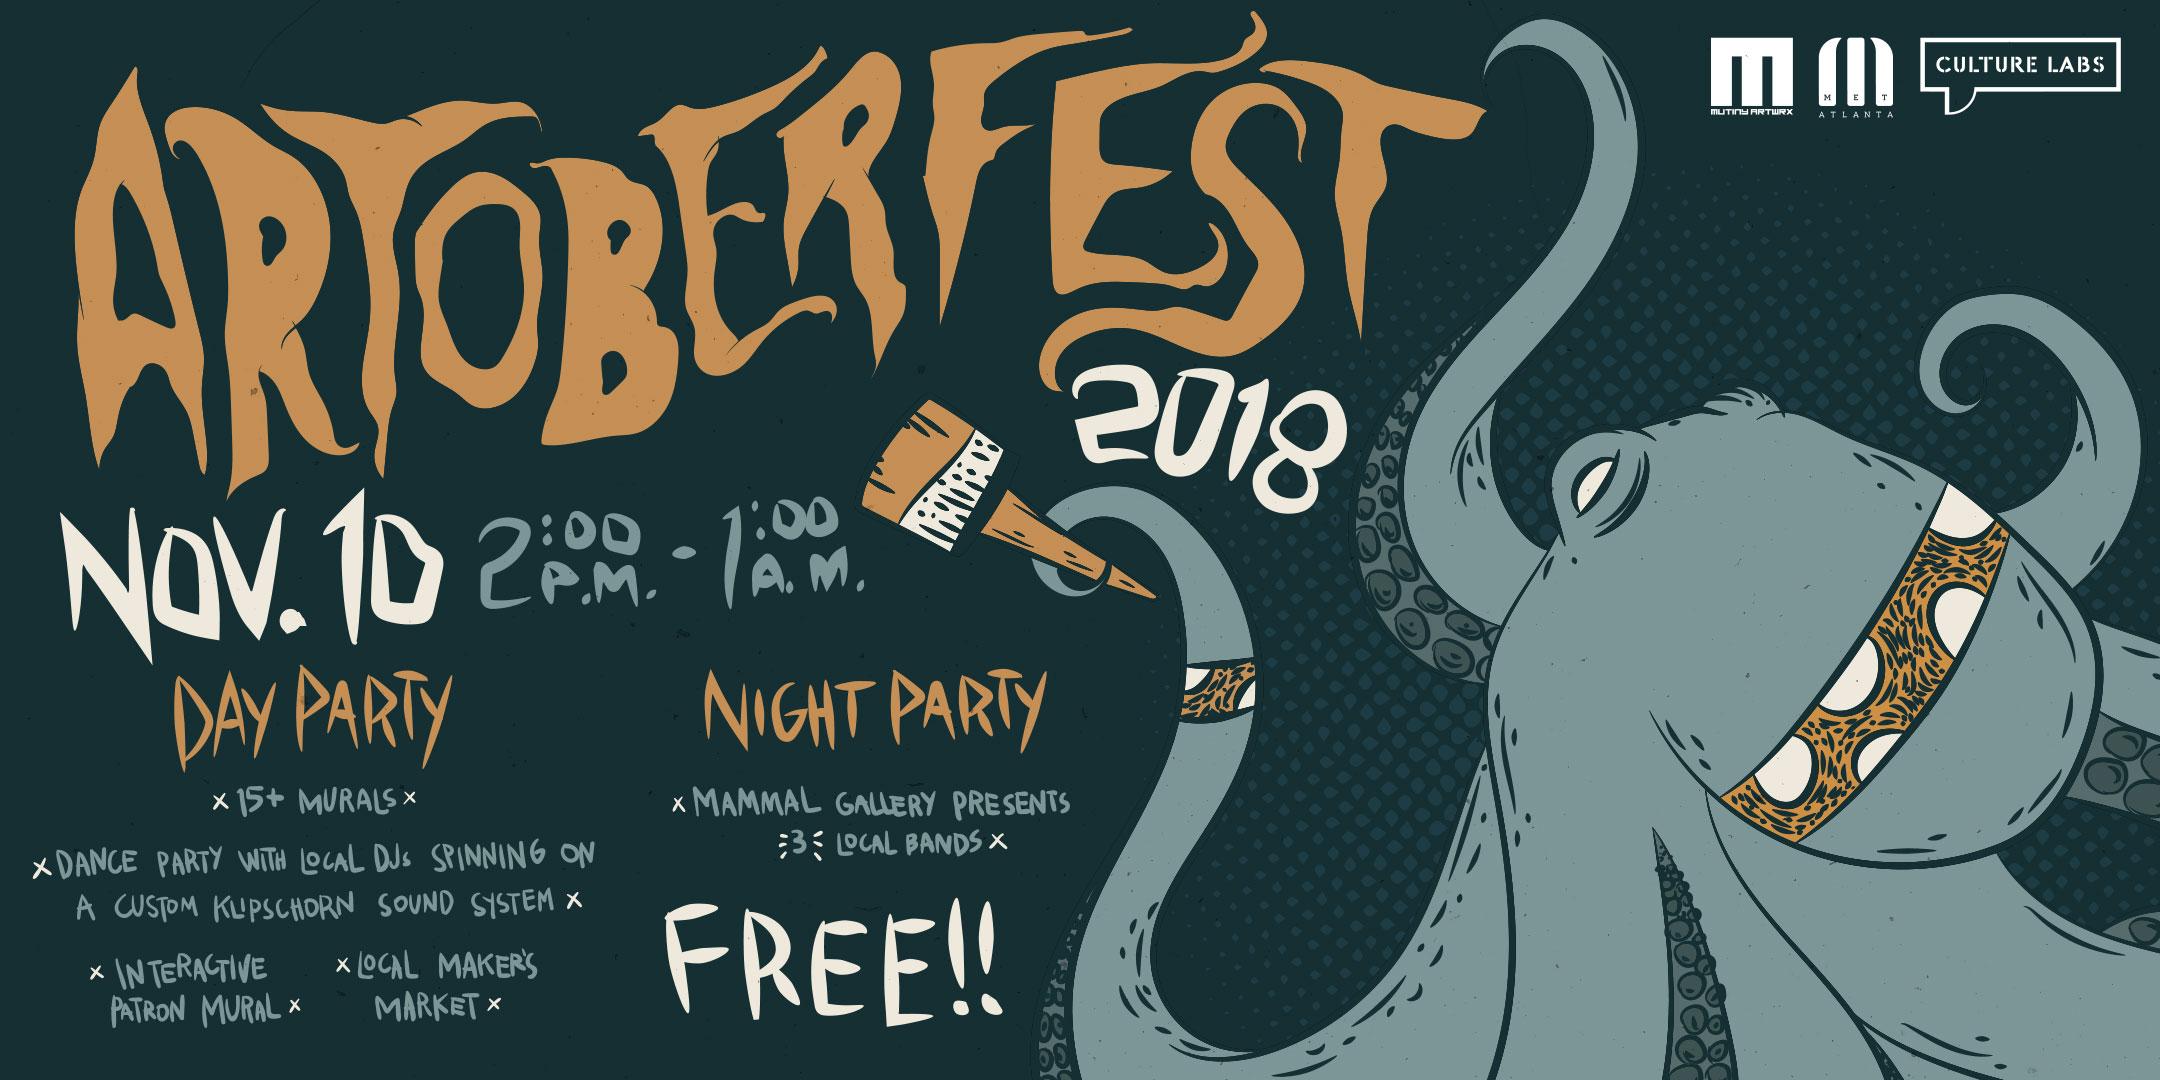 Artoberfest Atlanta 2018 Day & Night Party